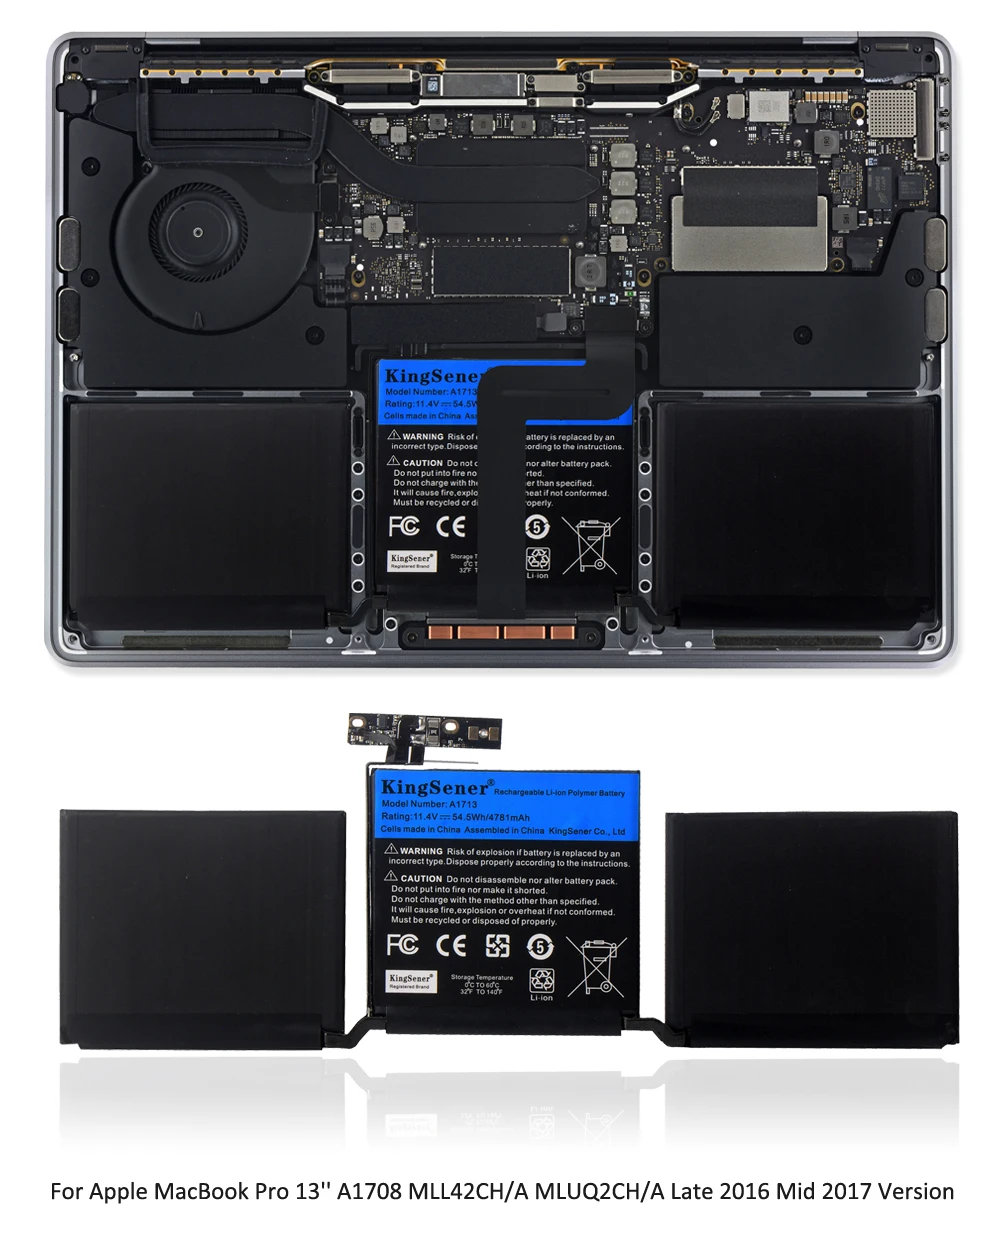 KingSener A1713 Laptop Battery for Apple MacBook Pro 13